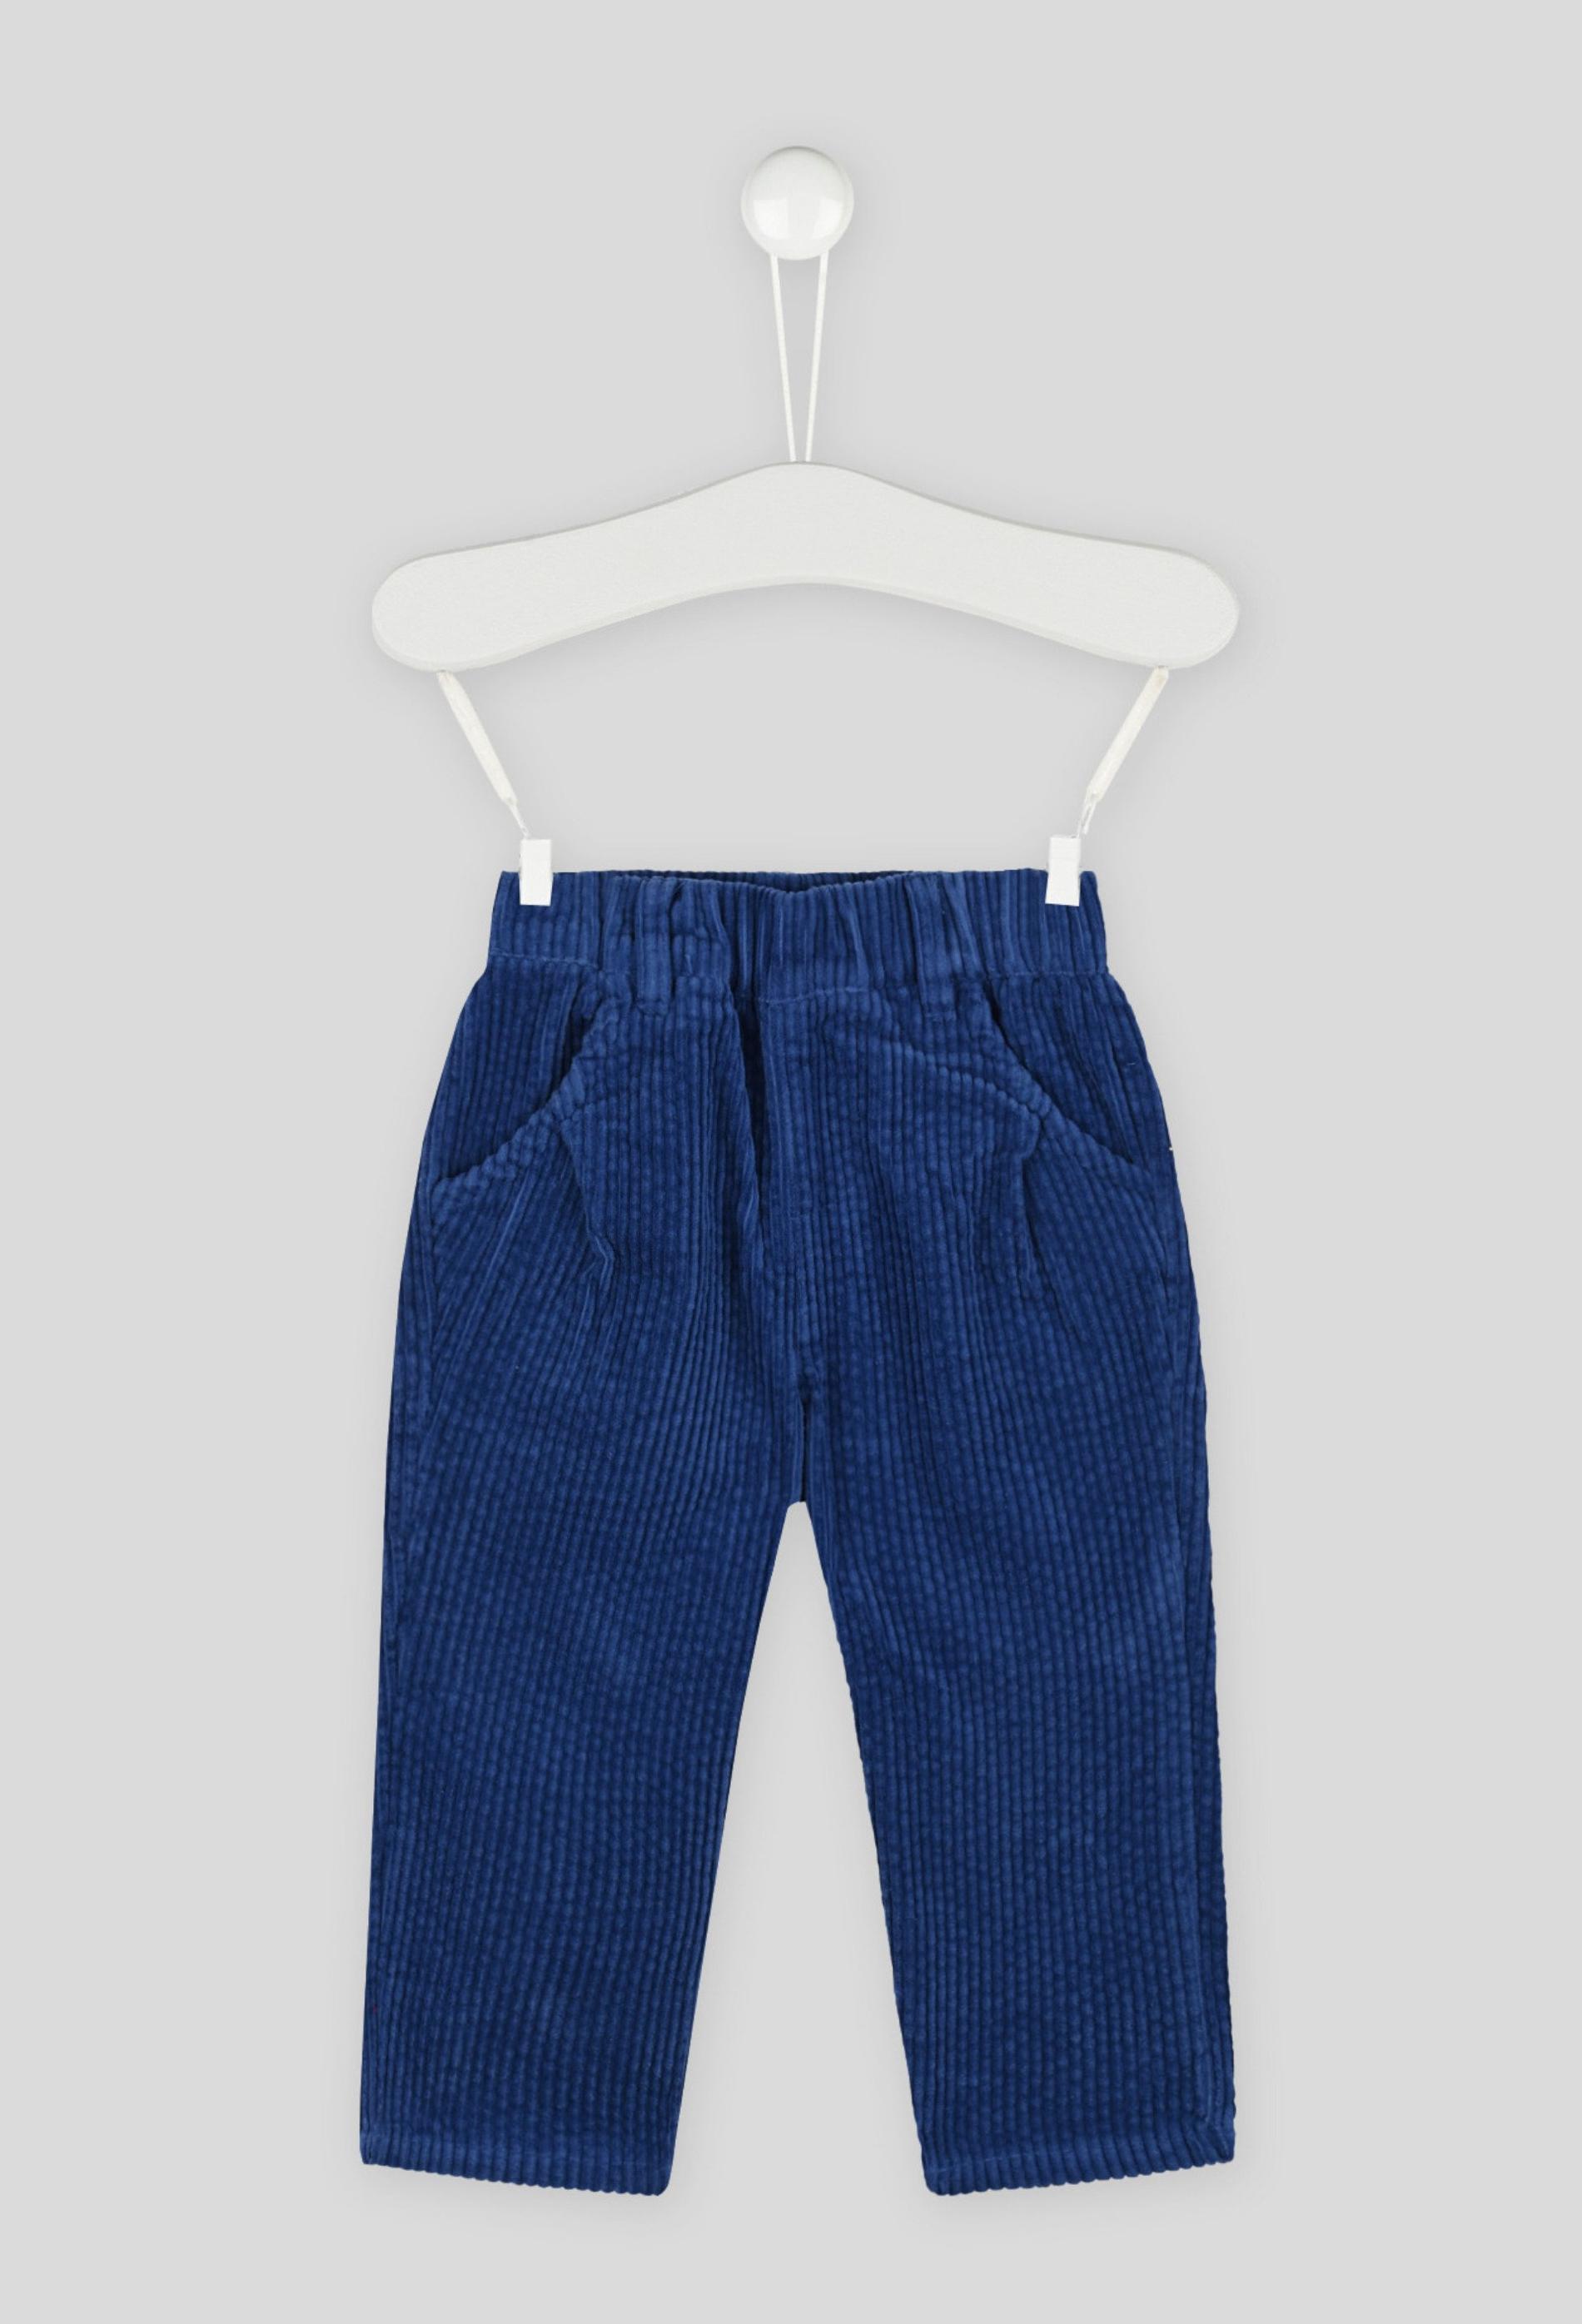 Pantalon uni en velours taille élastique, mixte. OEKO-TEX. 9 mois bleu